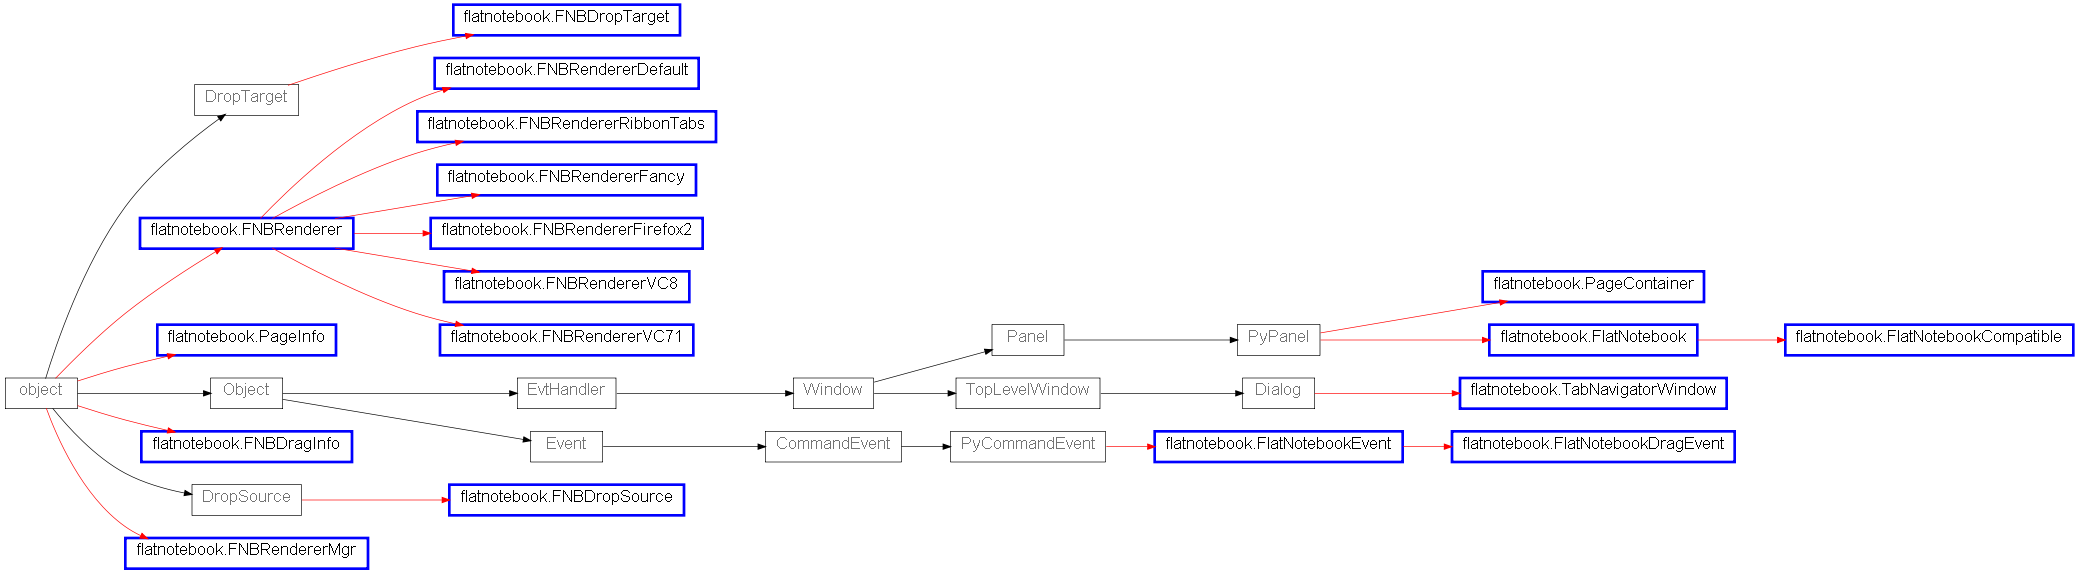 Inheritance diagram of flatnotebook